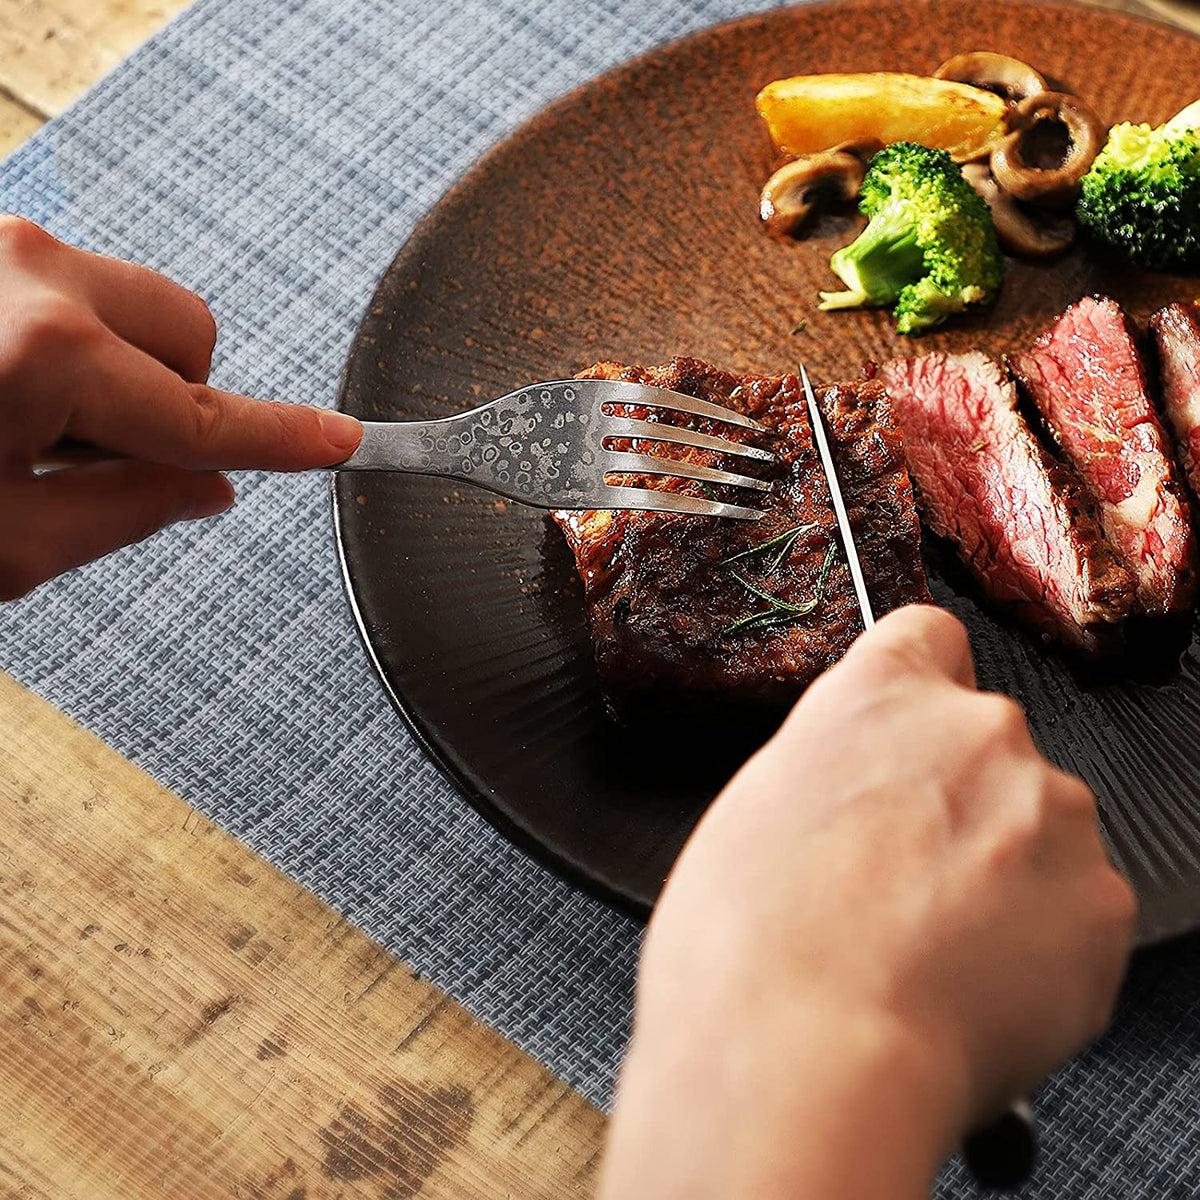 Damascus Cutlery】Sunnecko Damascus Steak Knives Set of 4, 5 Inch Serr –